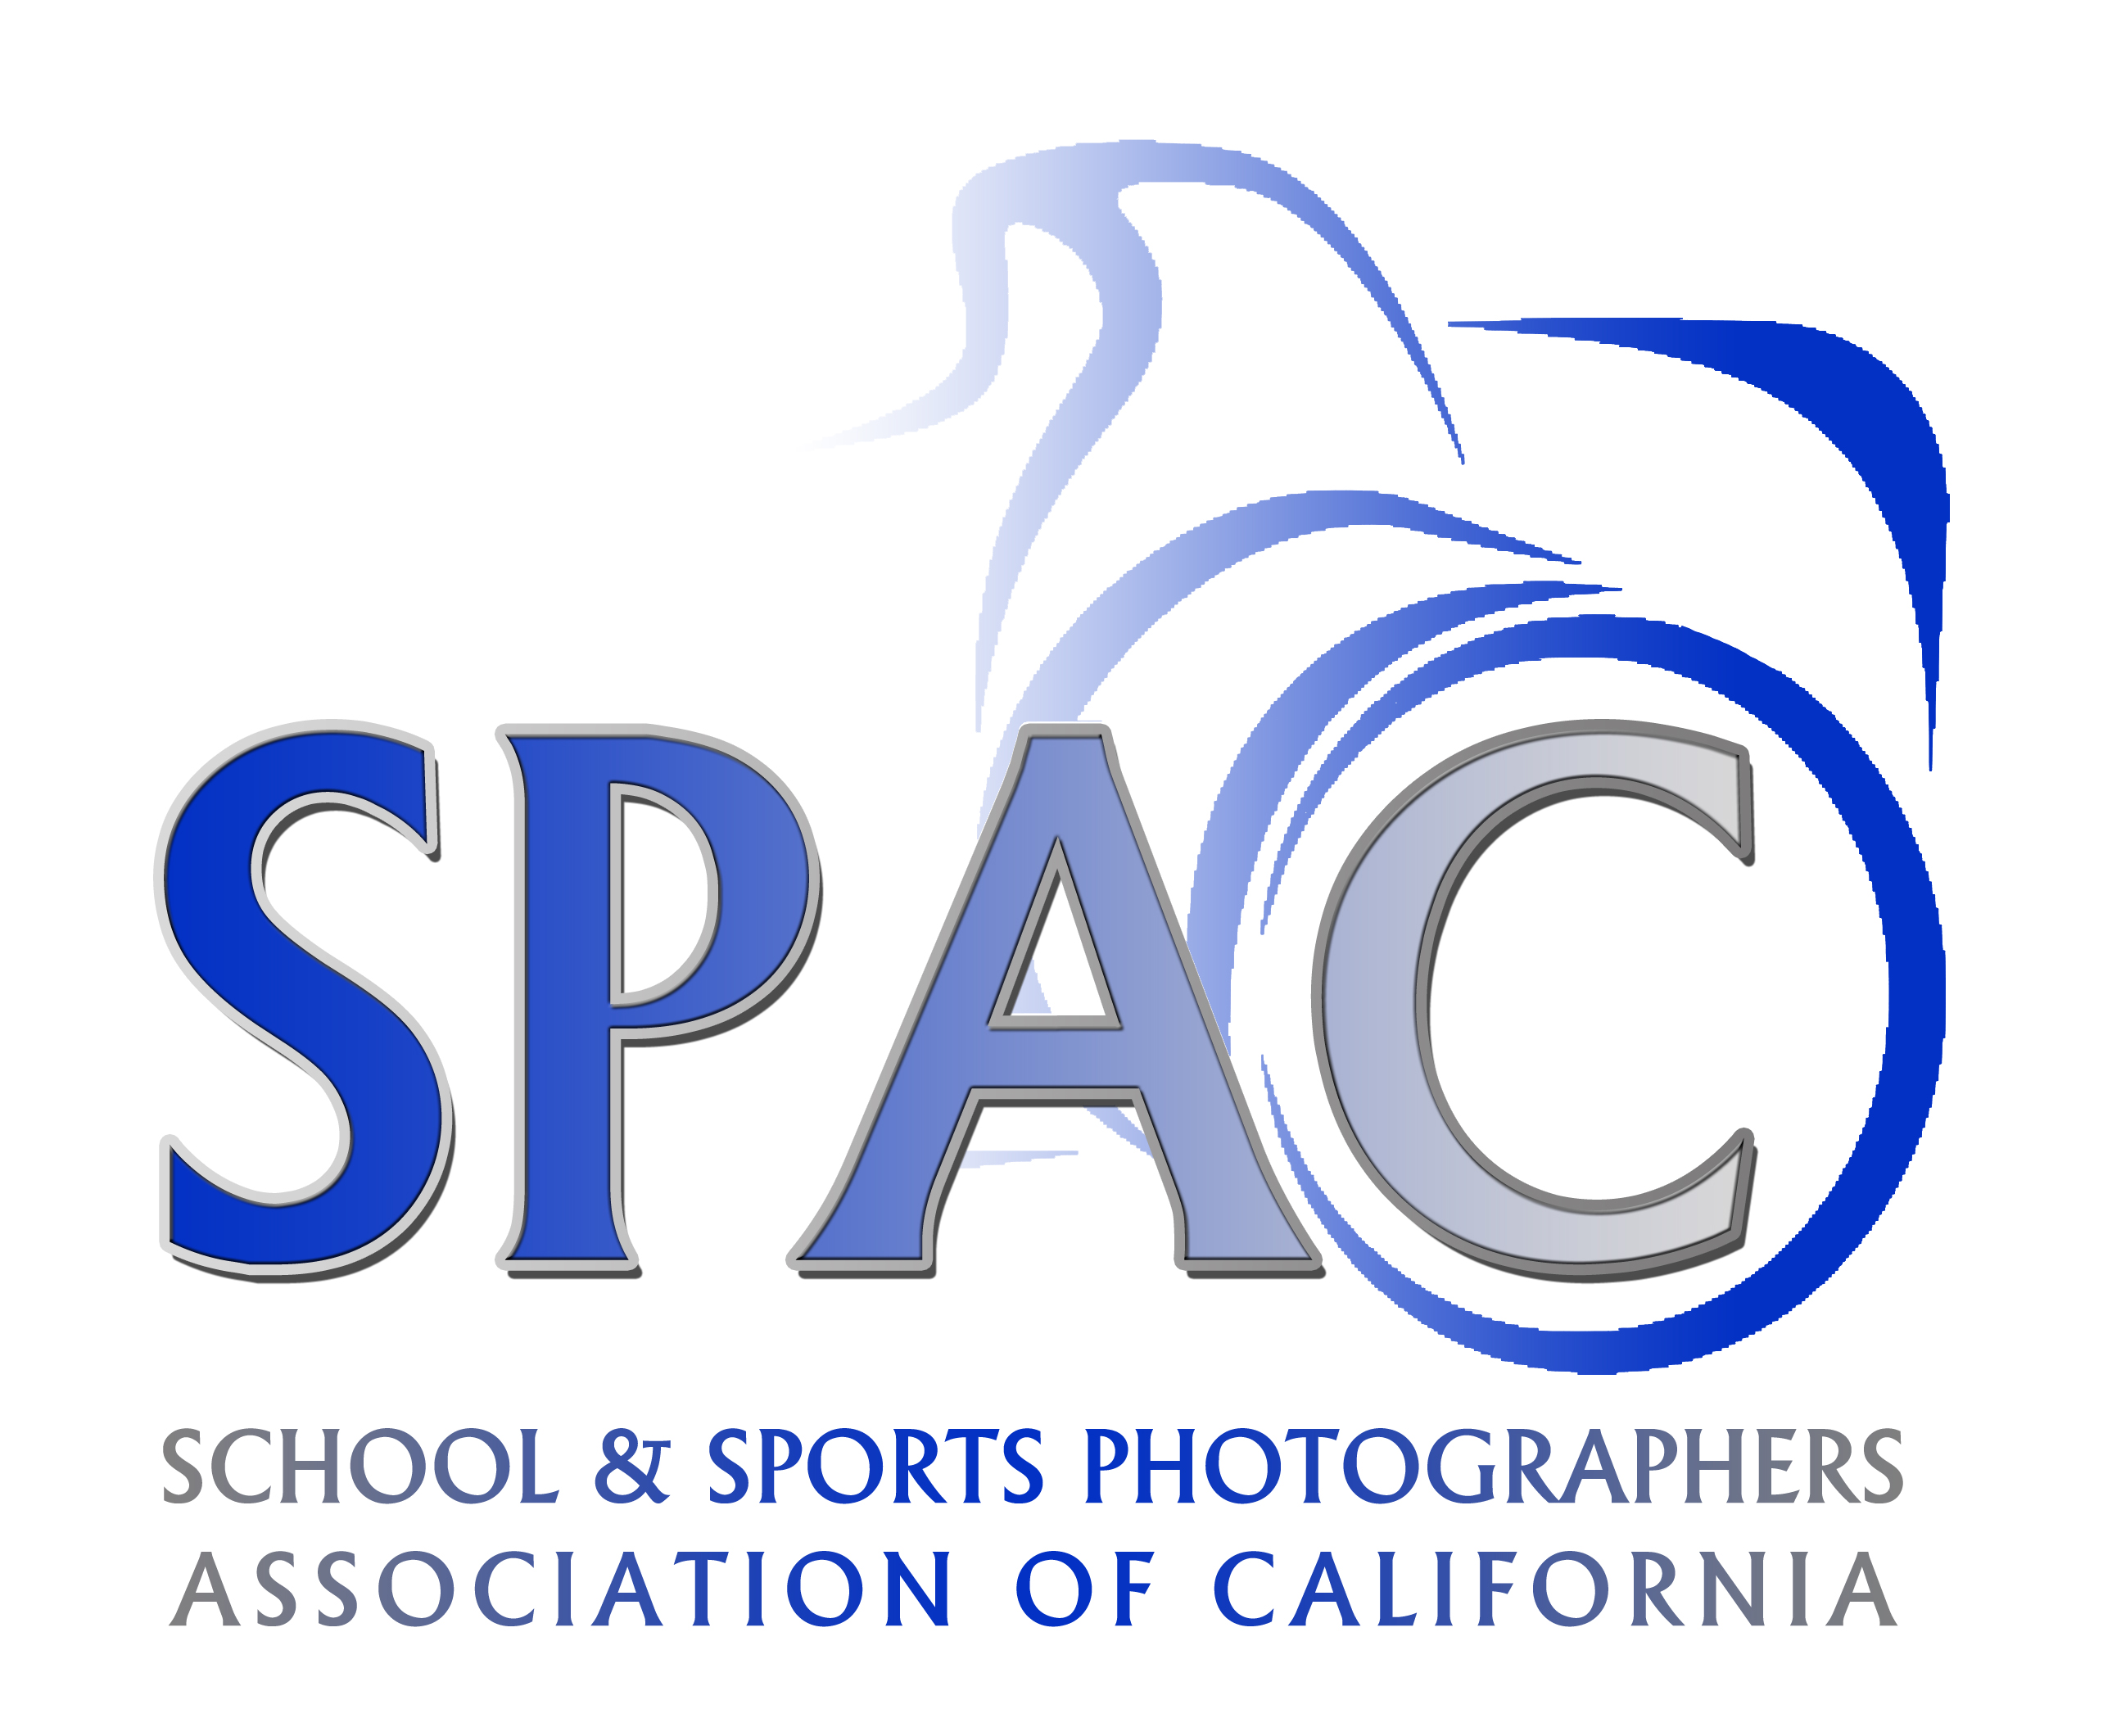 SPAC - School & Sports Photographers Association of California